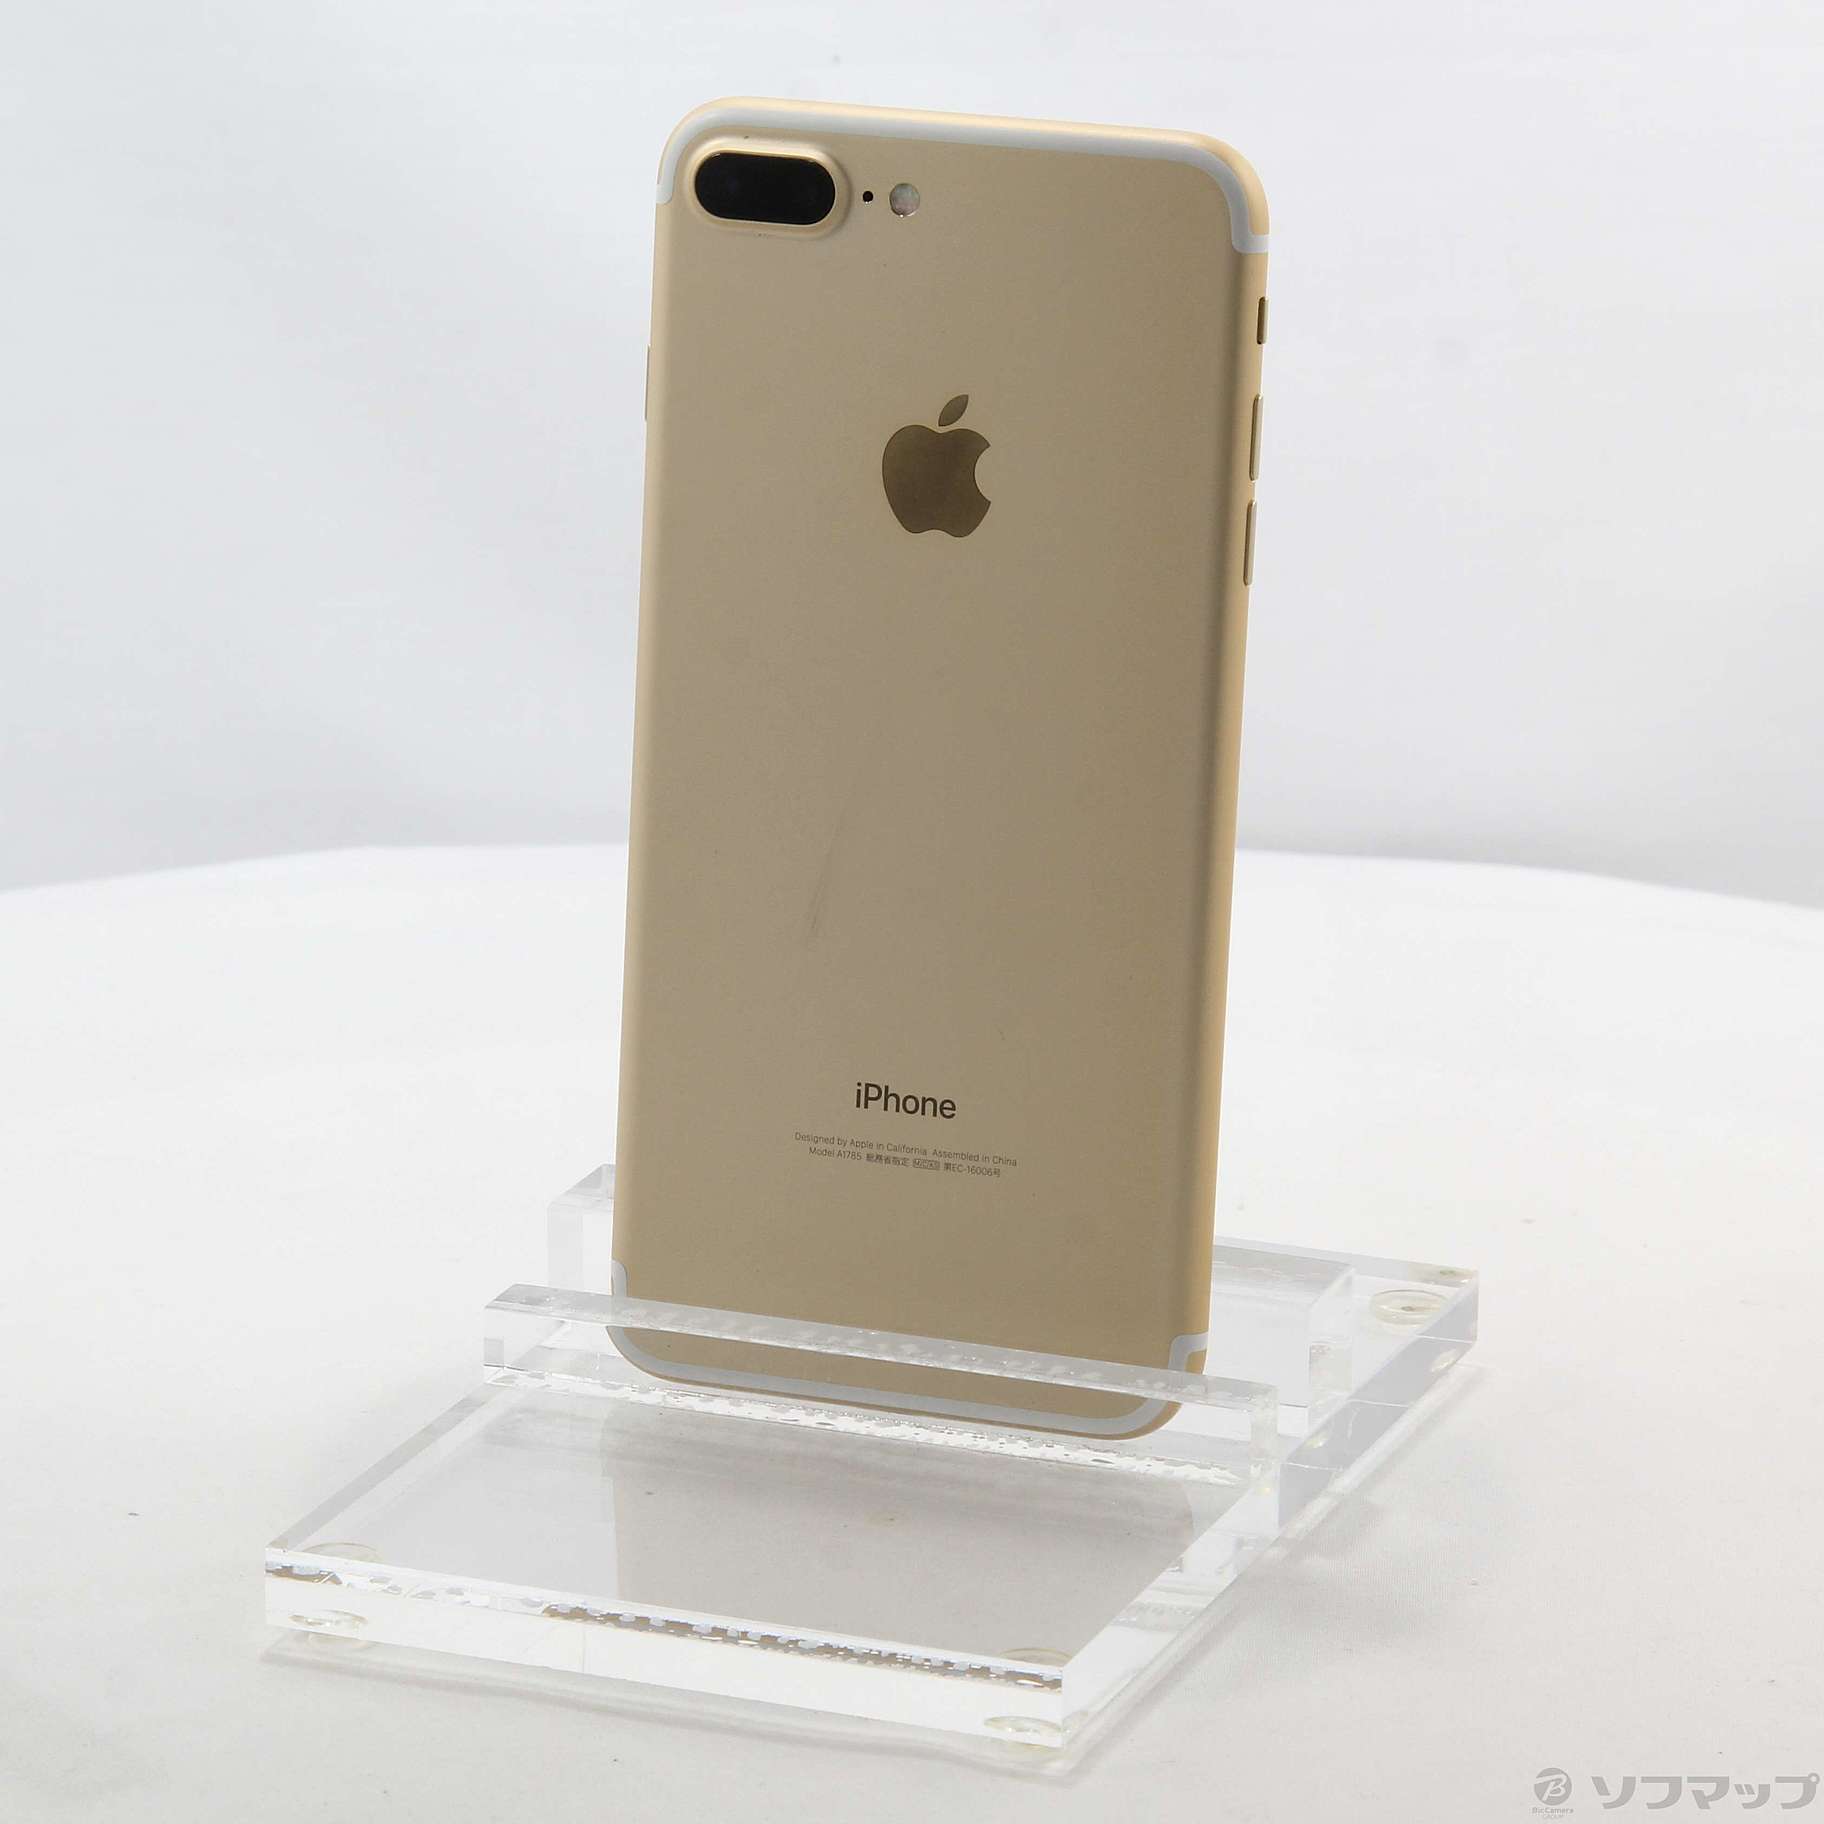 iPhone7 Plus 128GB Gold simフリー